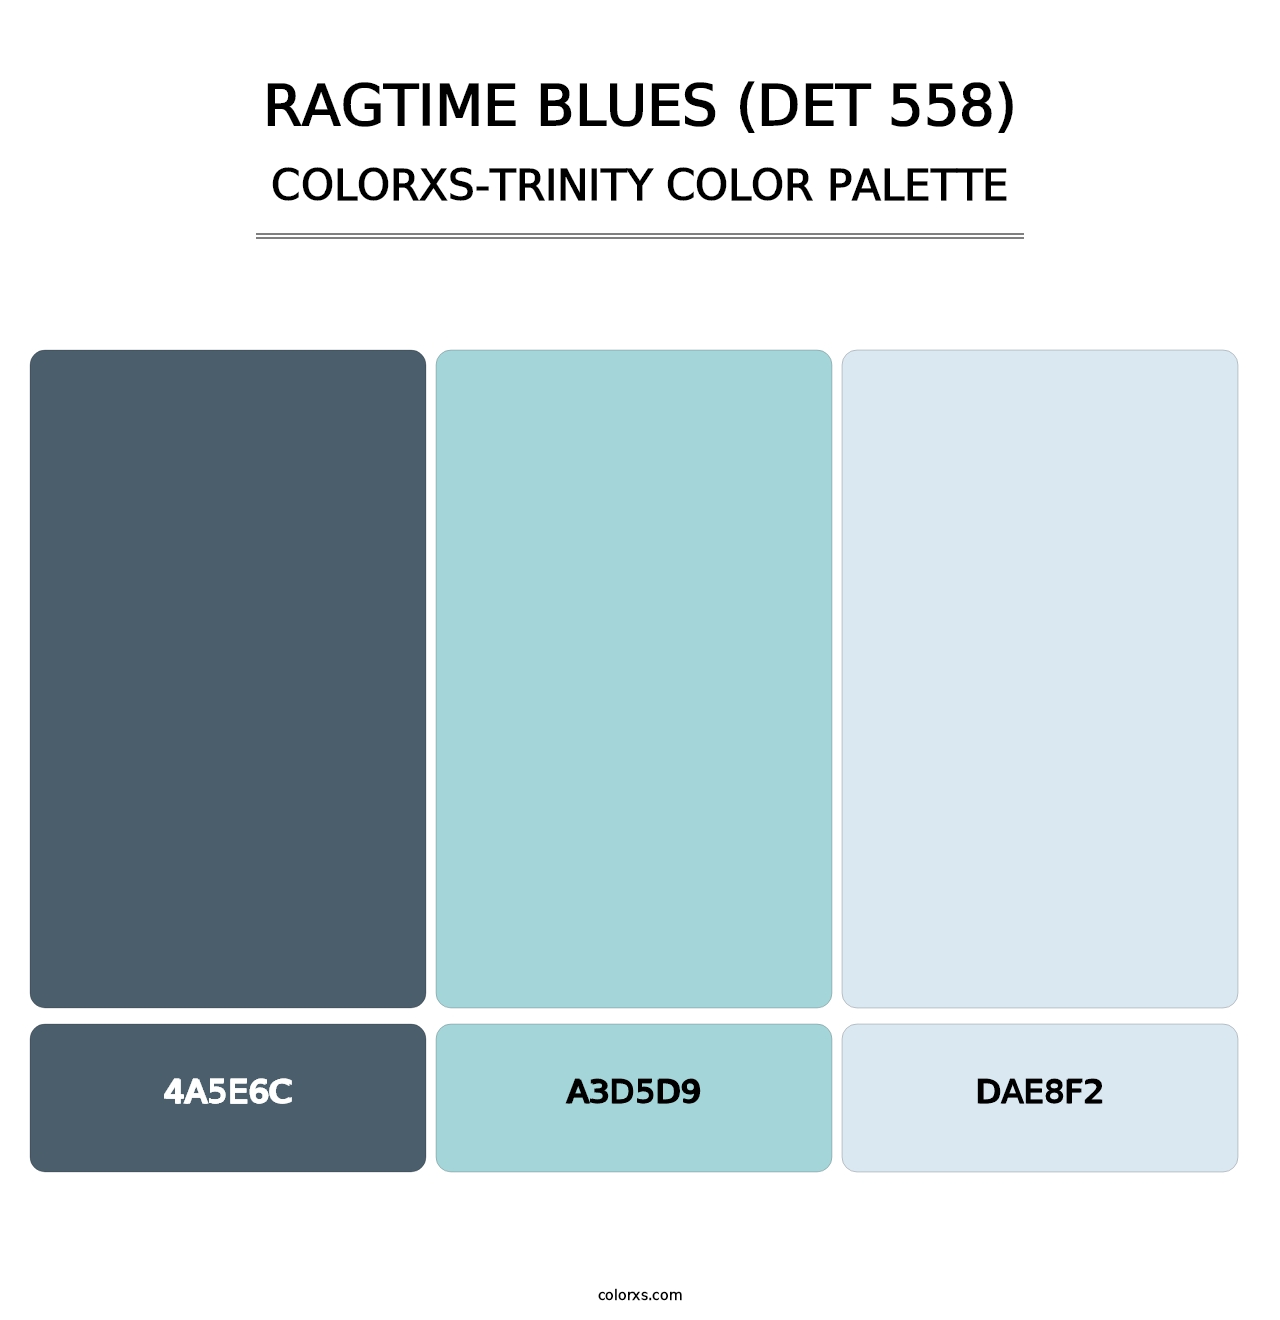 Ragtime Blues (DET 558) - Colorxs Trinity Palette